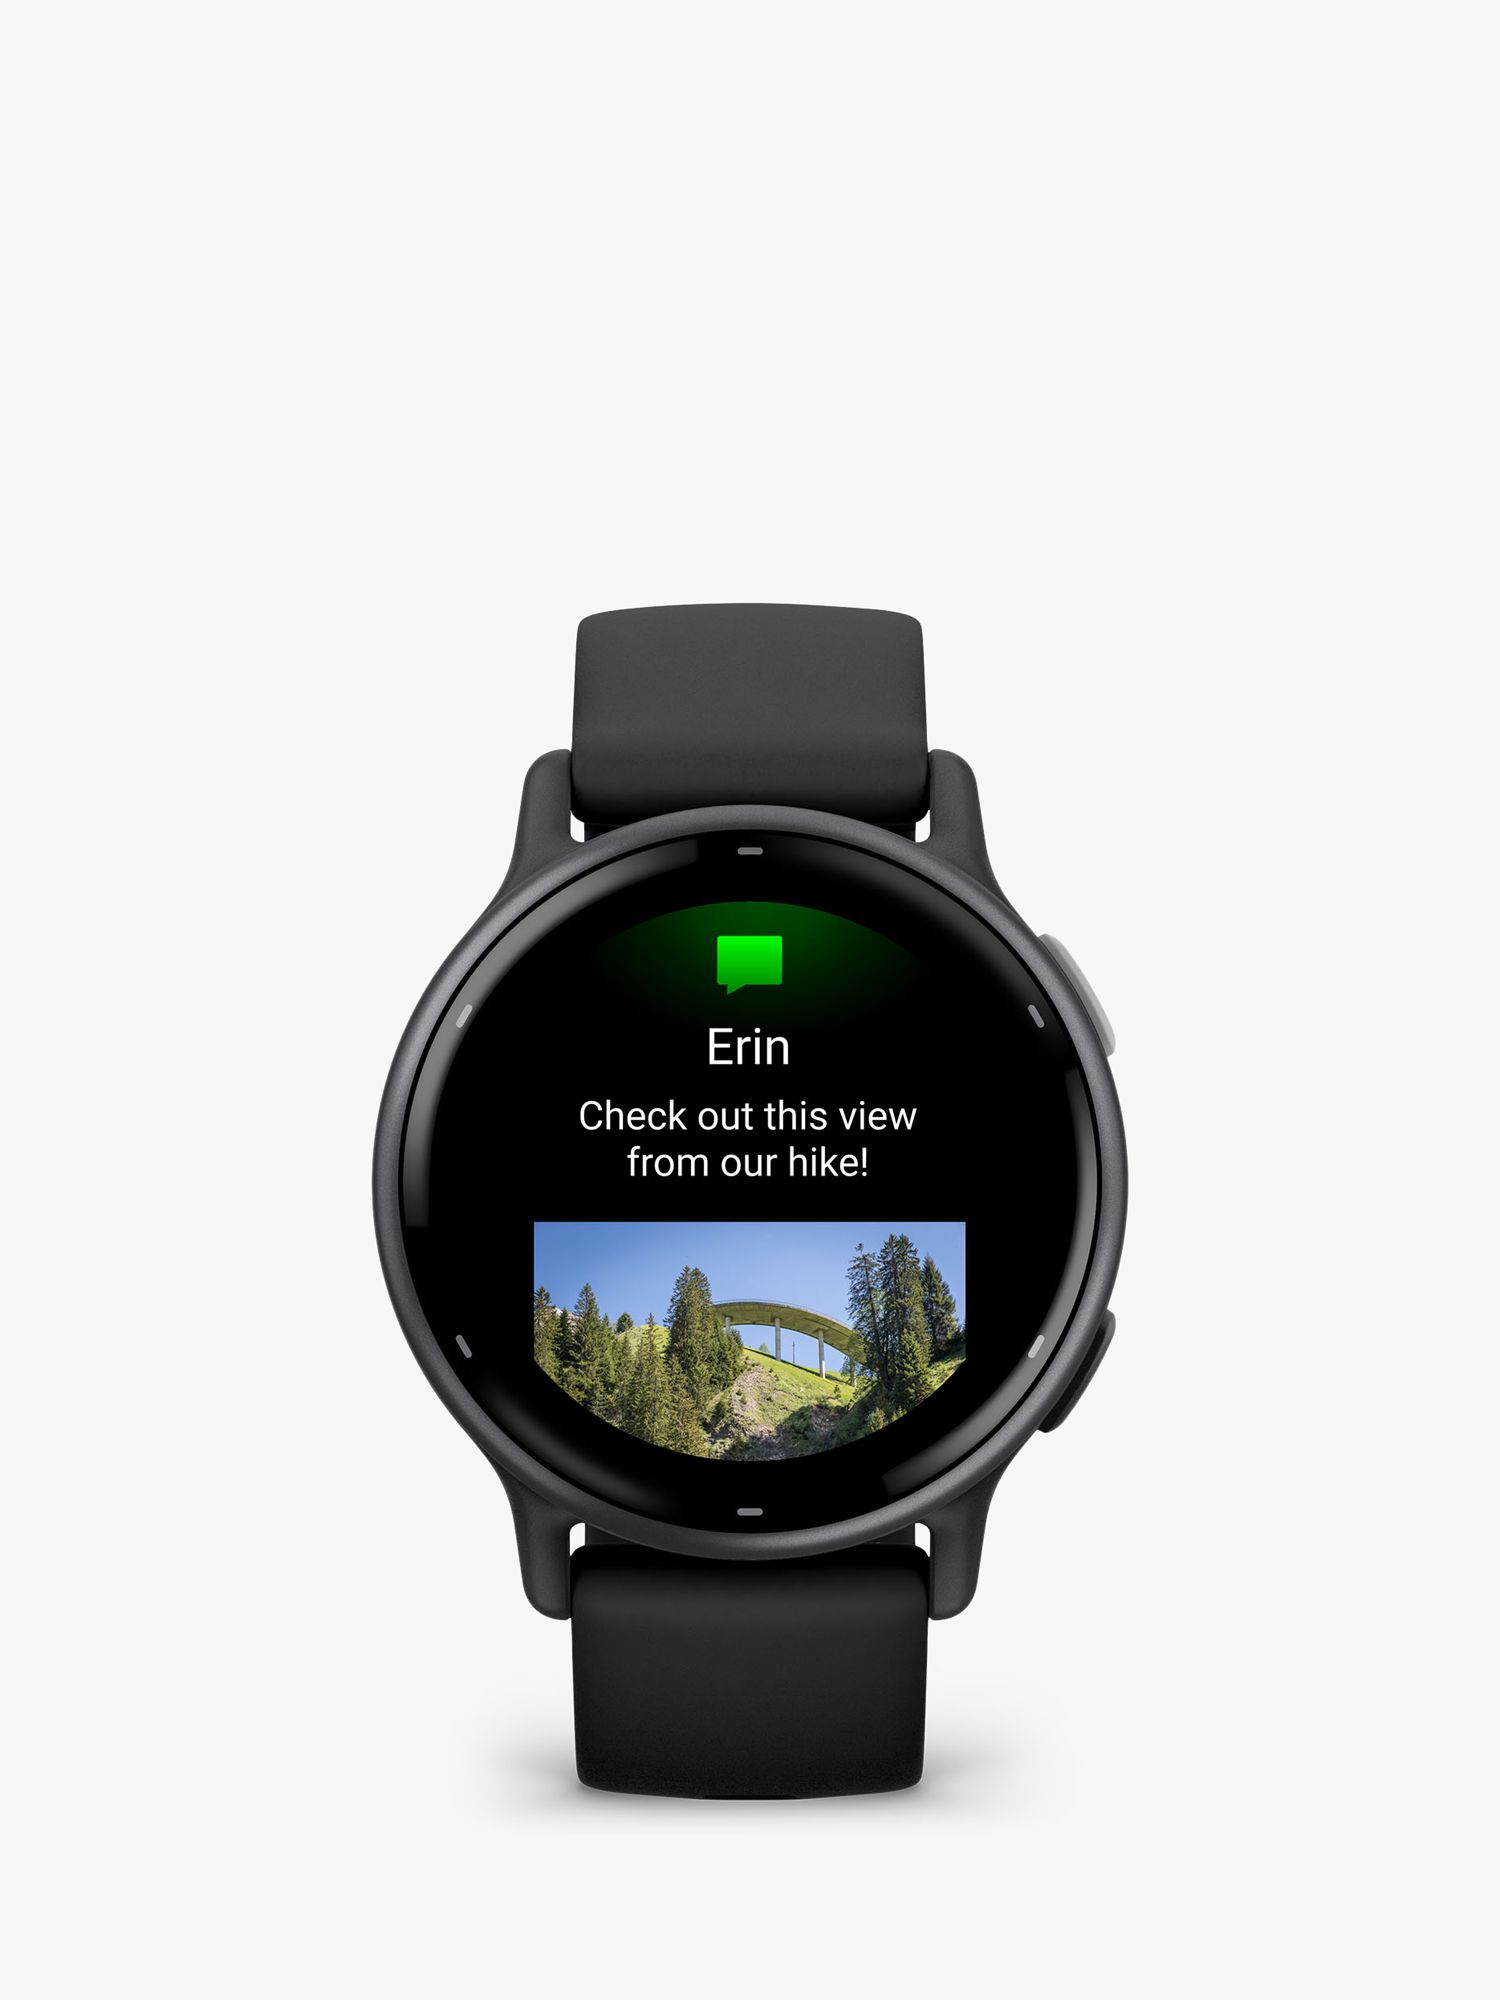 Garmin vivoactive 5 GPS Smartwatch, 42mm, Black